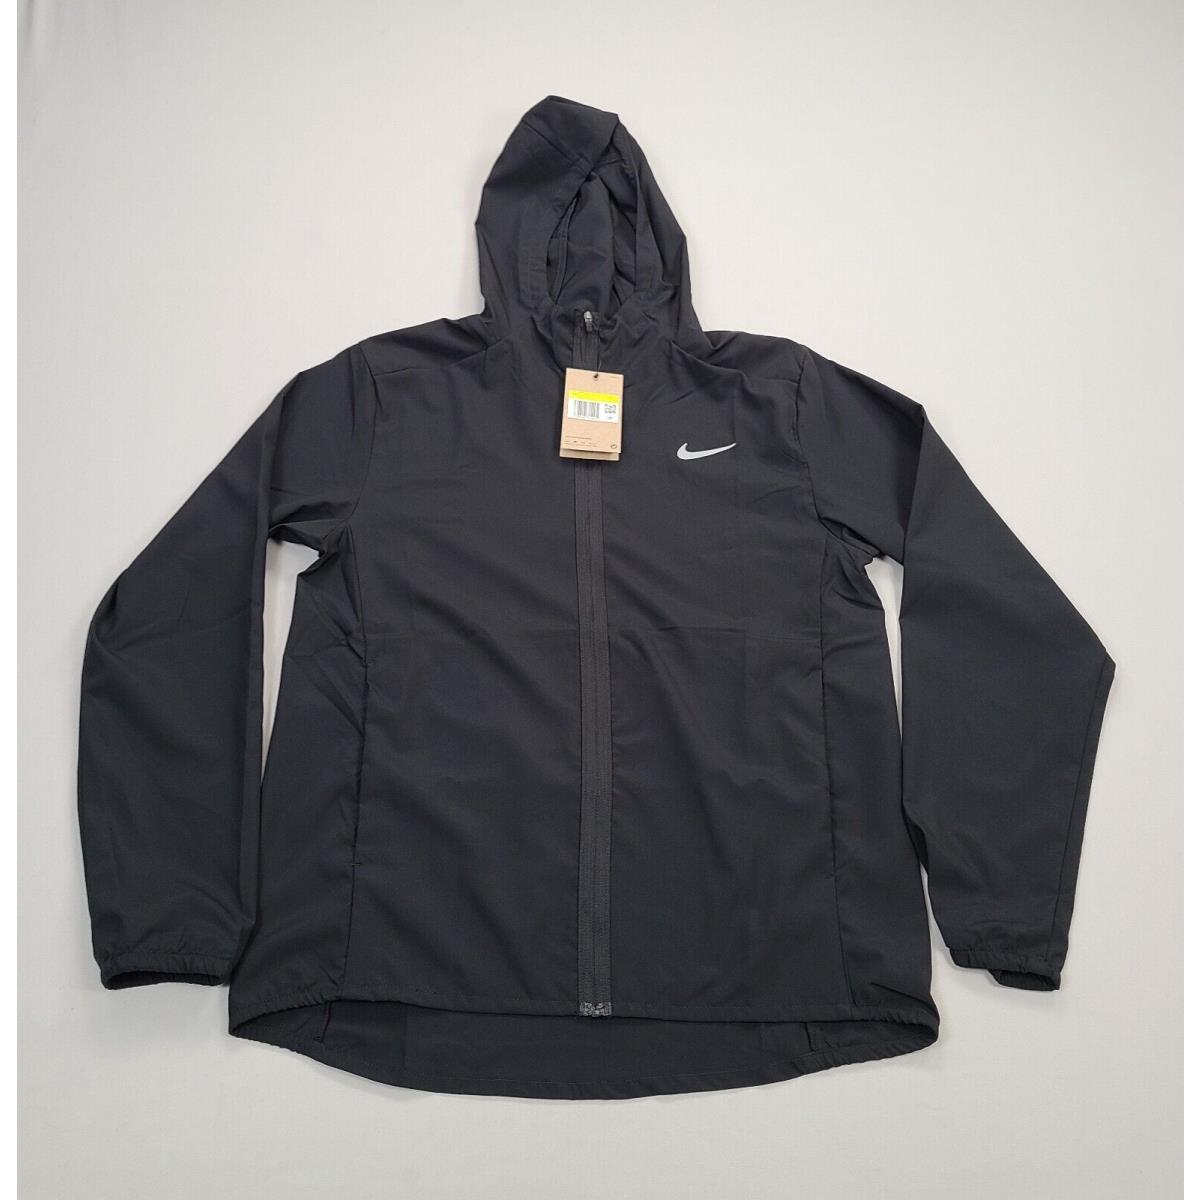 Nike Jacket Adult Small Black Dri-fit Hooded Versatile Jacket Full Zip Mens